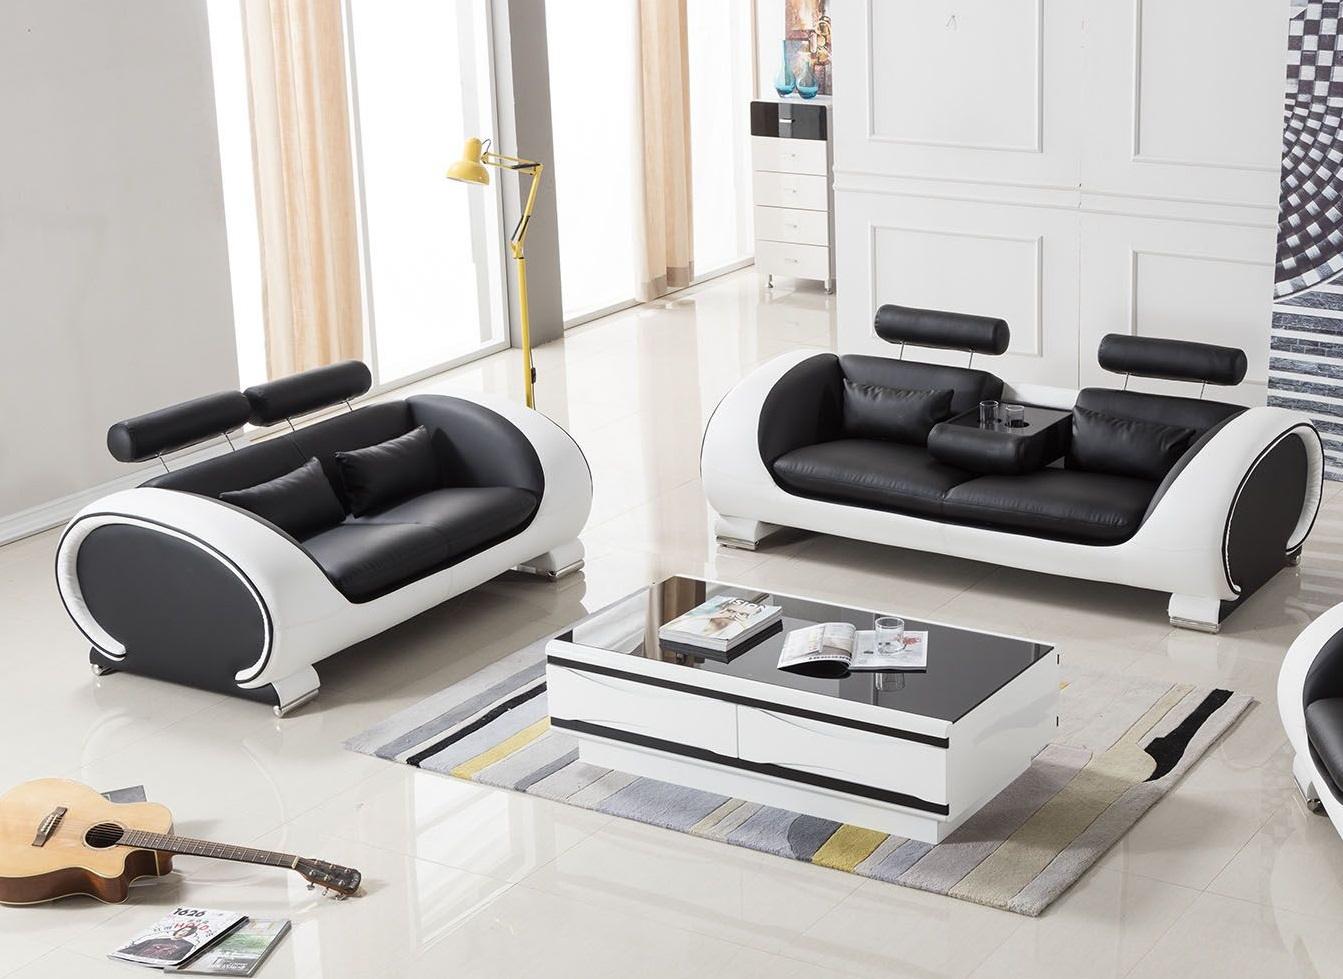 Contemporary, Modern Sofa Set AE-D802-BK-W AE-D802-BK-W-2PC in White, Black Bonded Leather